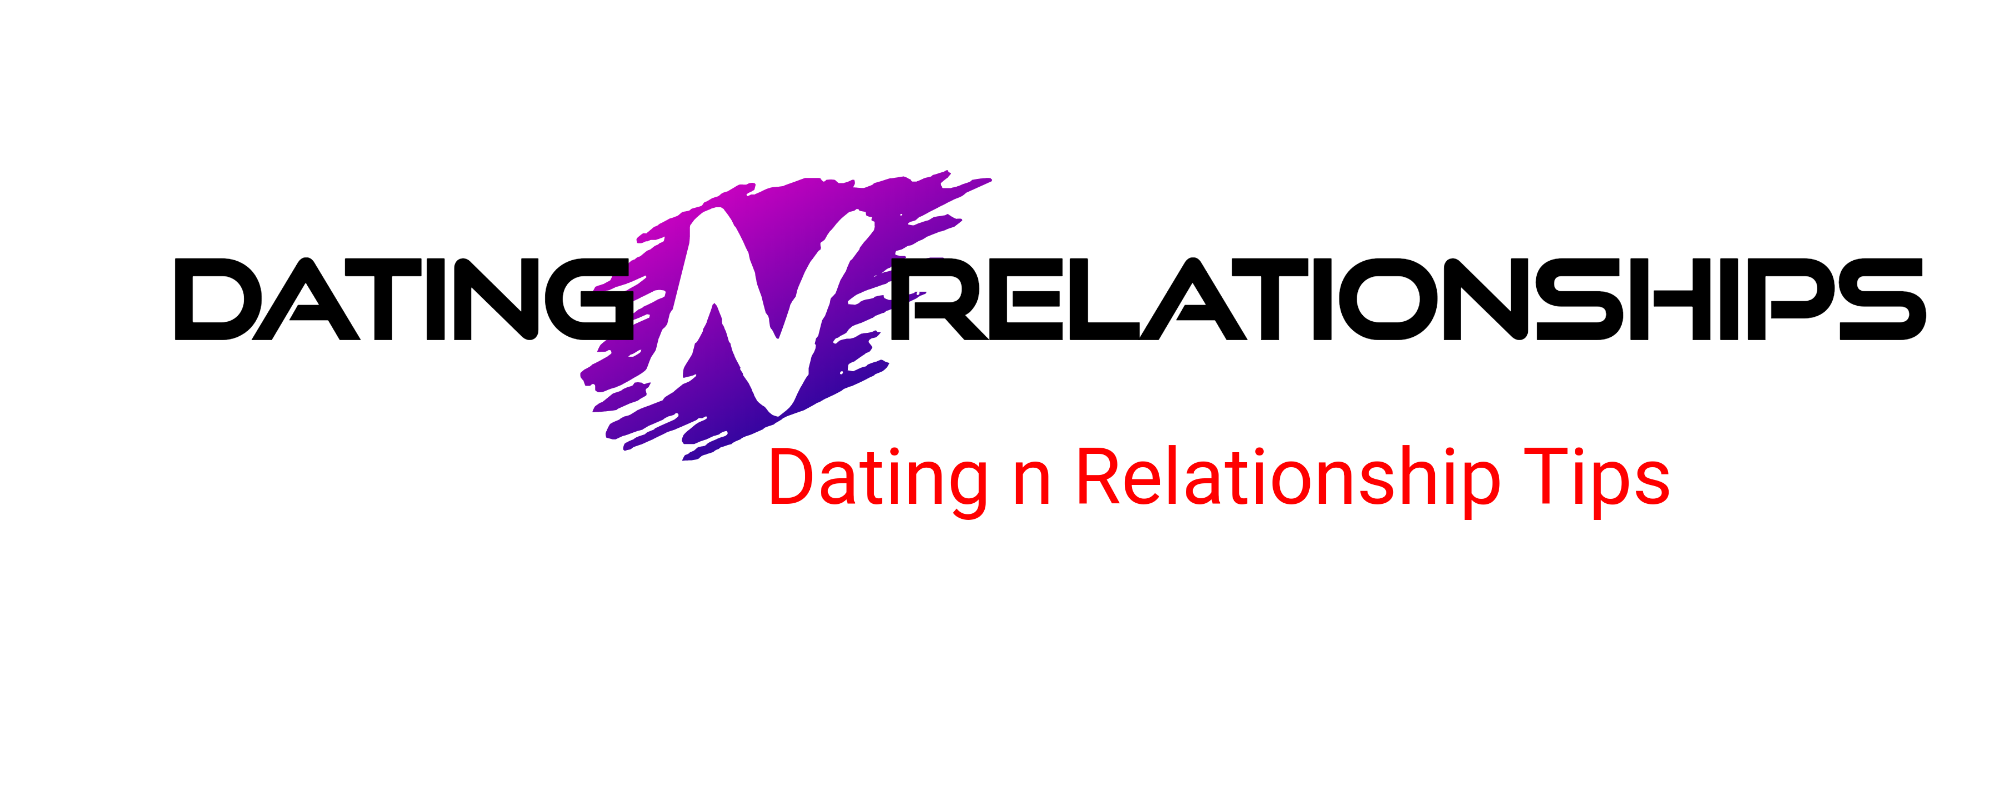 Dating n relationships